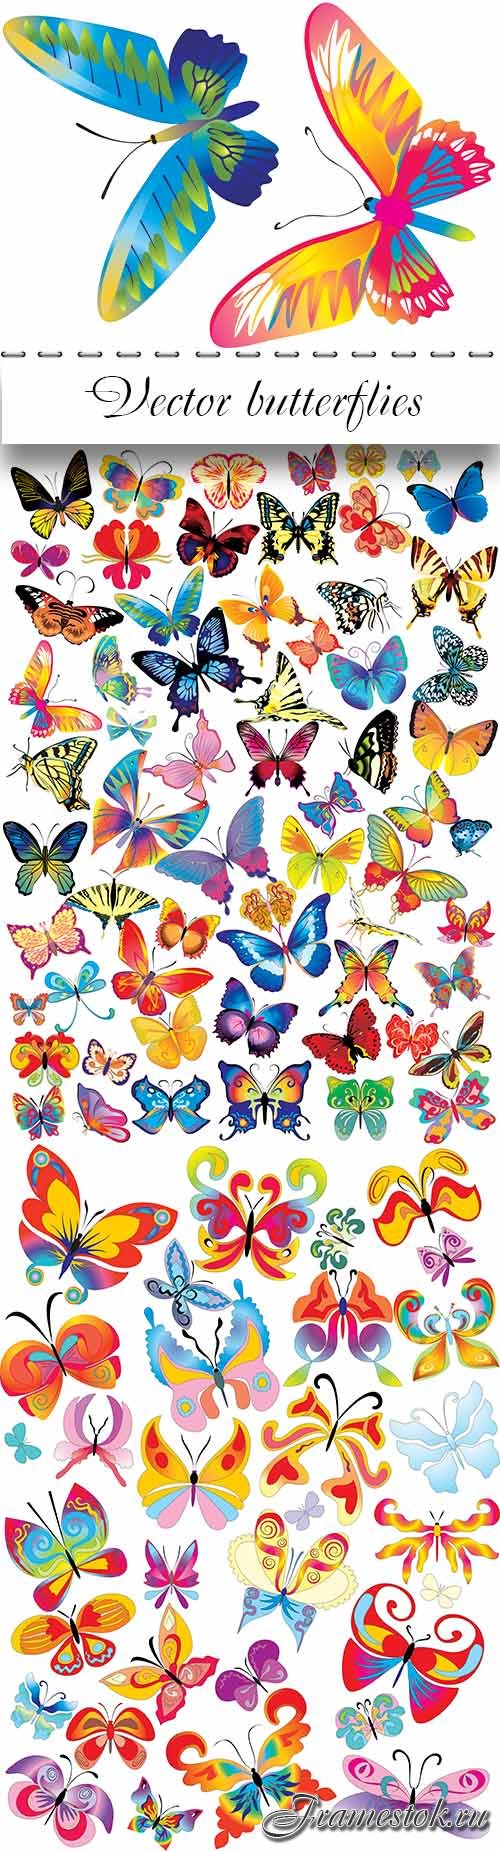 Vector butterflies for design